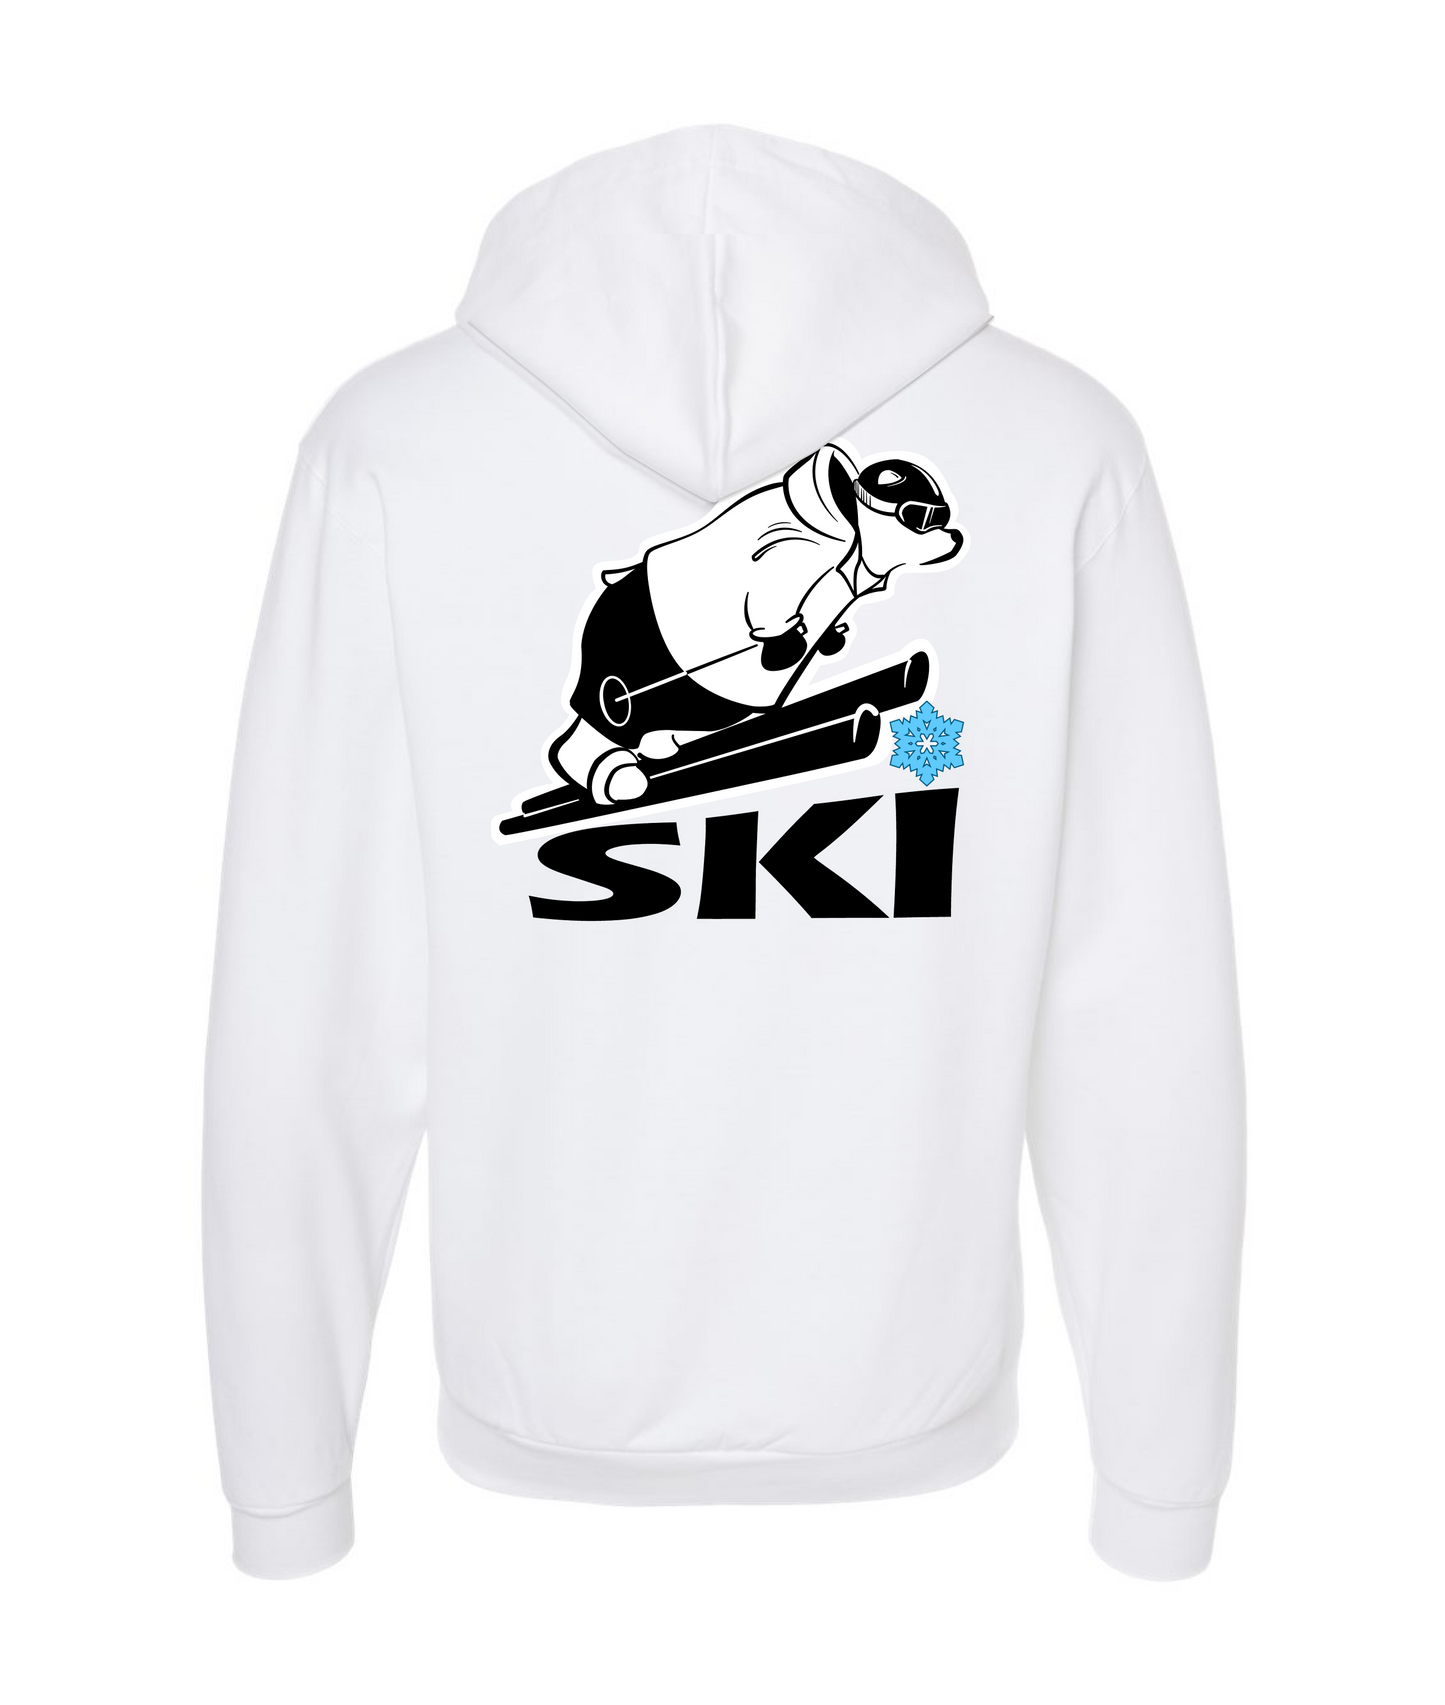 Ski Merch - Logo - White Zip Hoodie